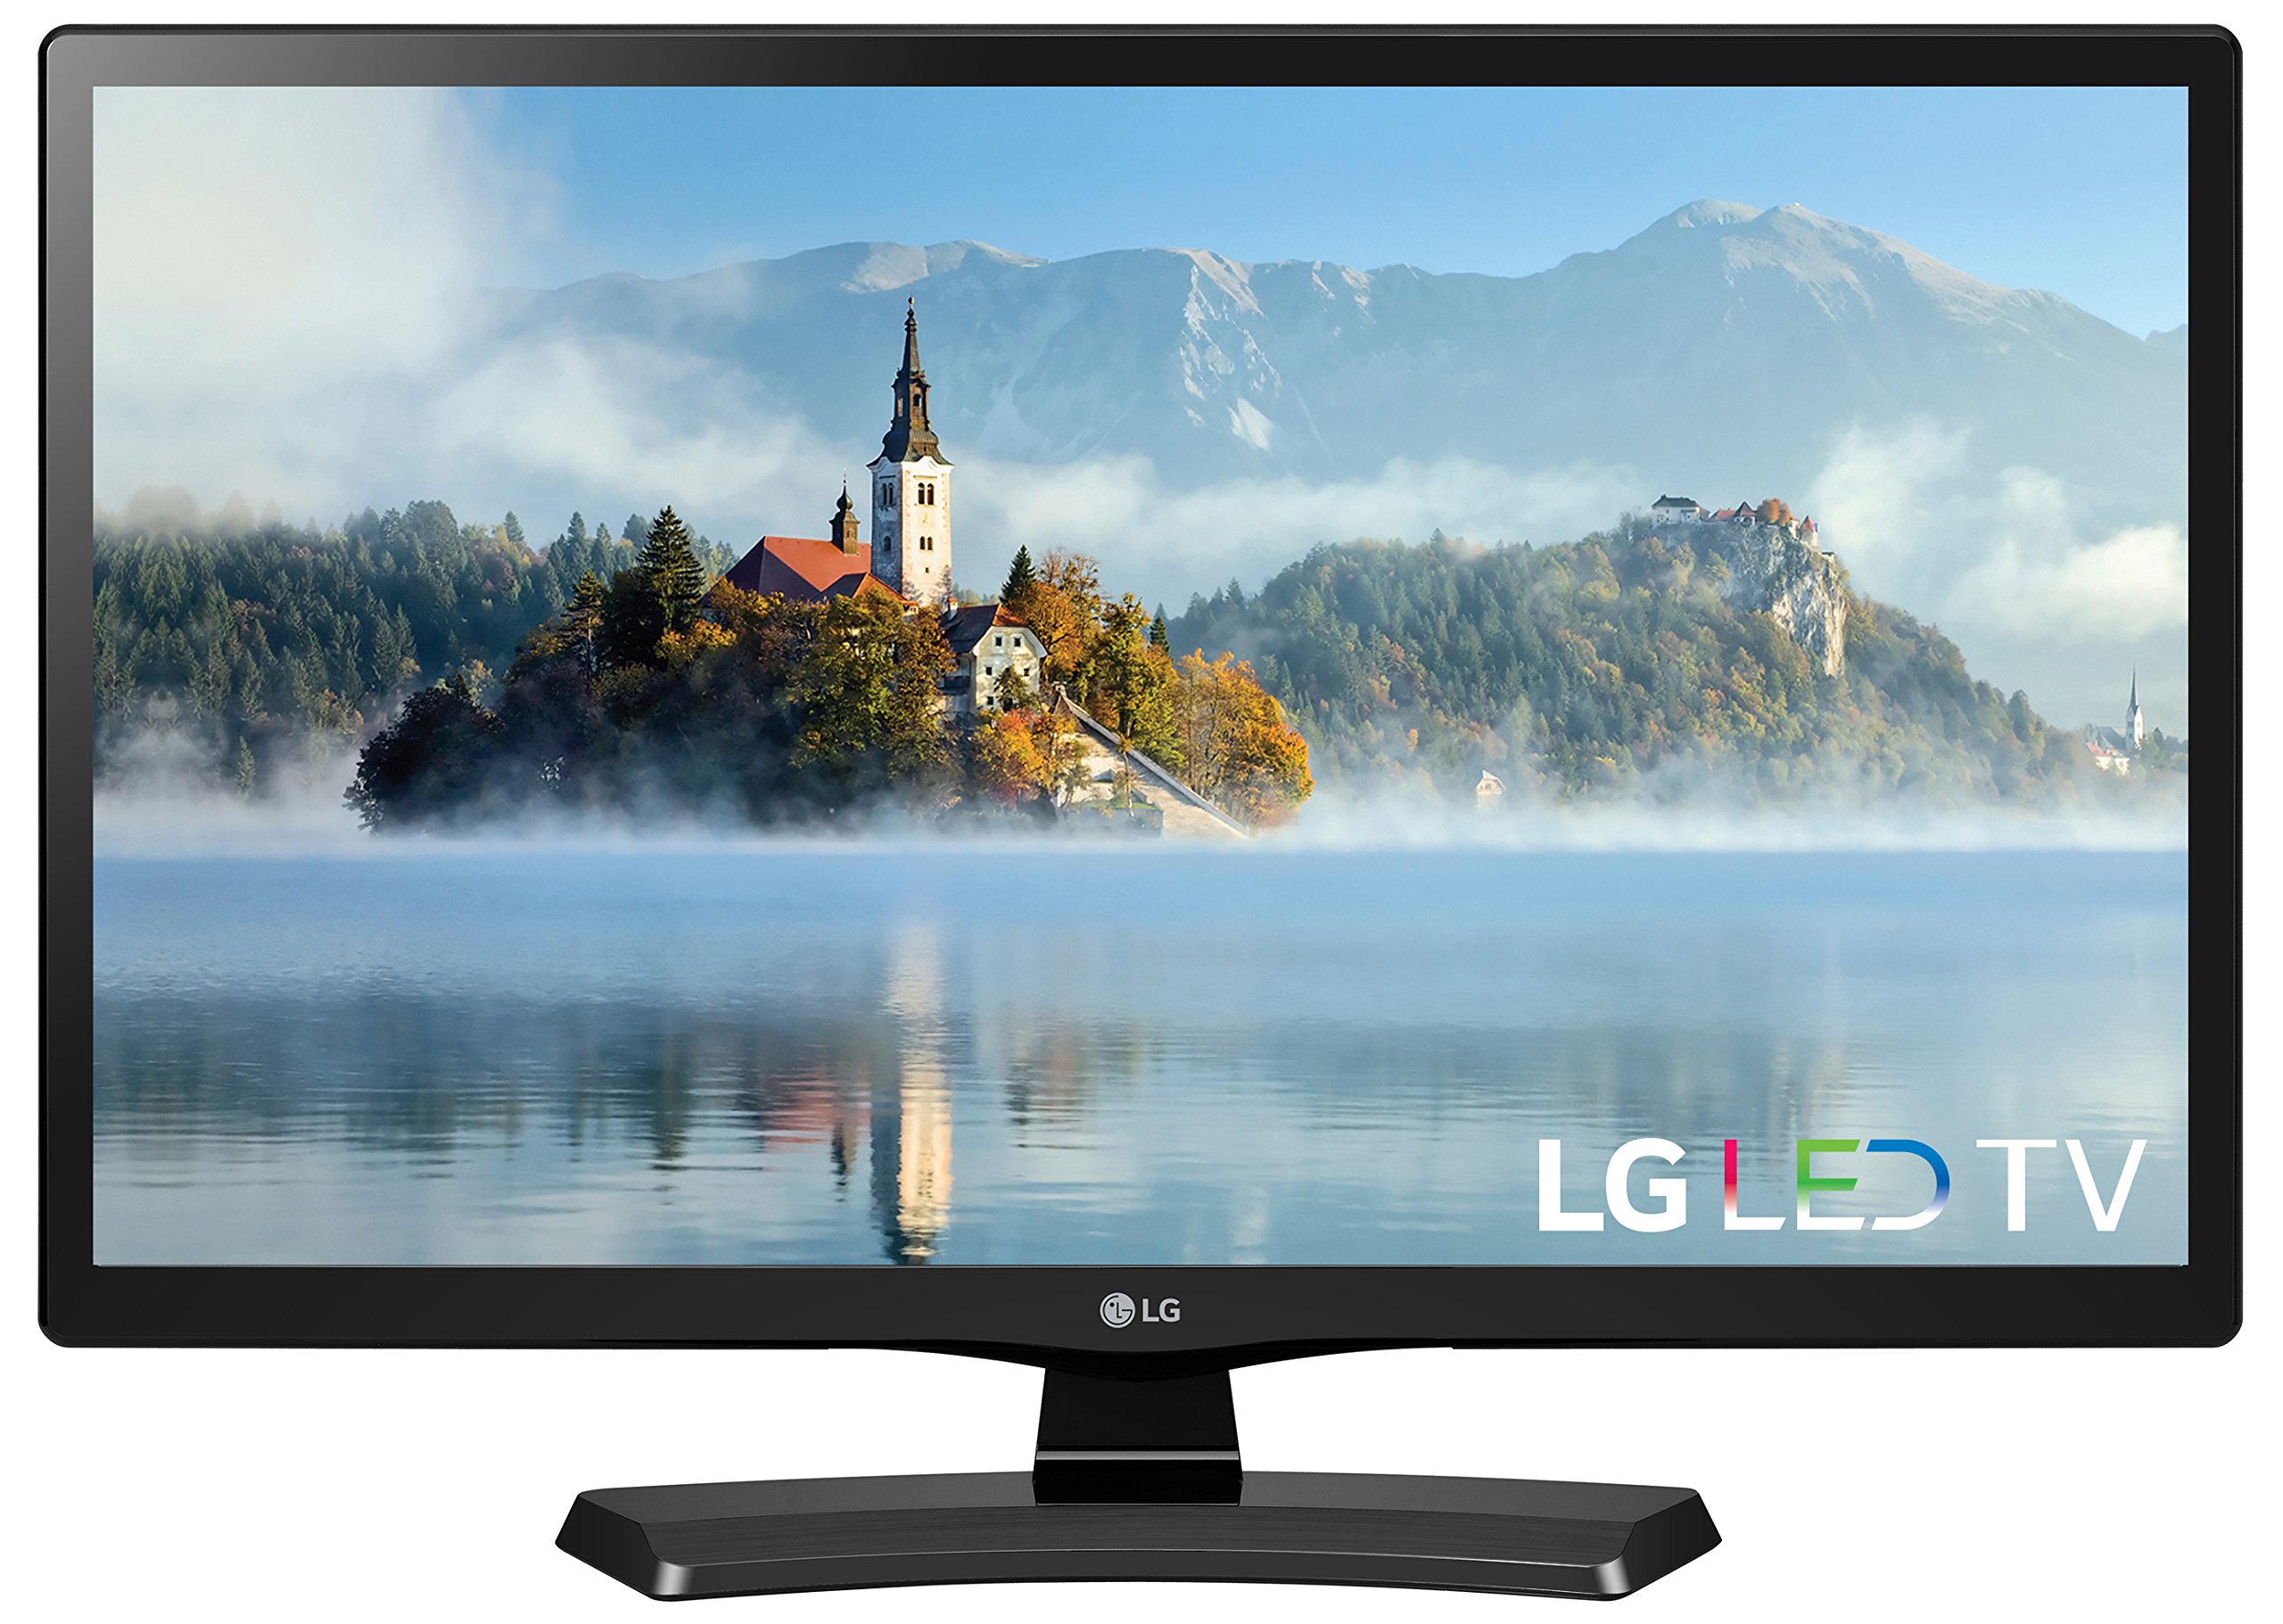 LG LCD TV 24